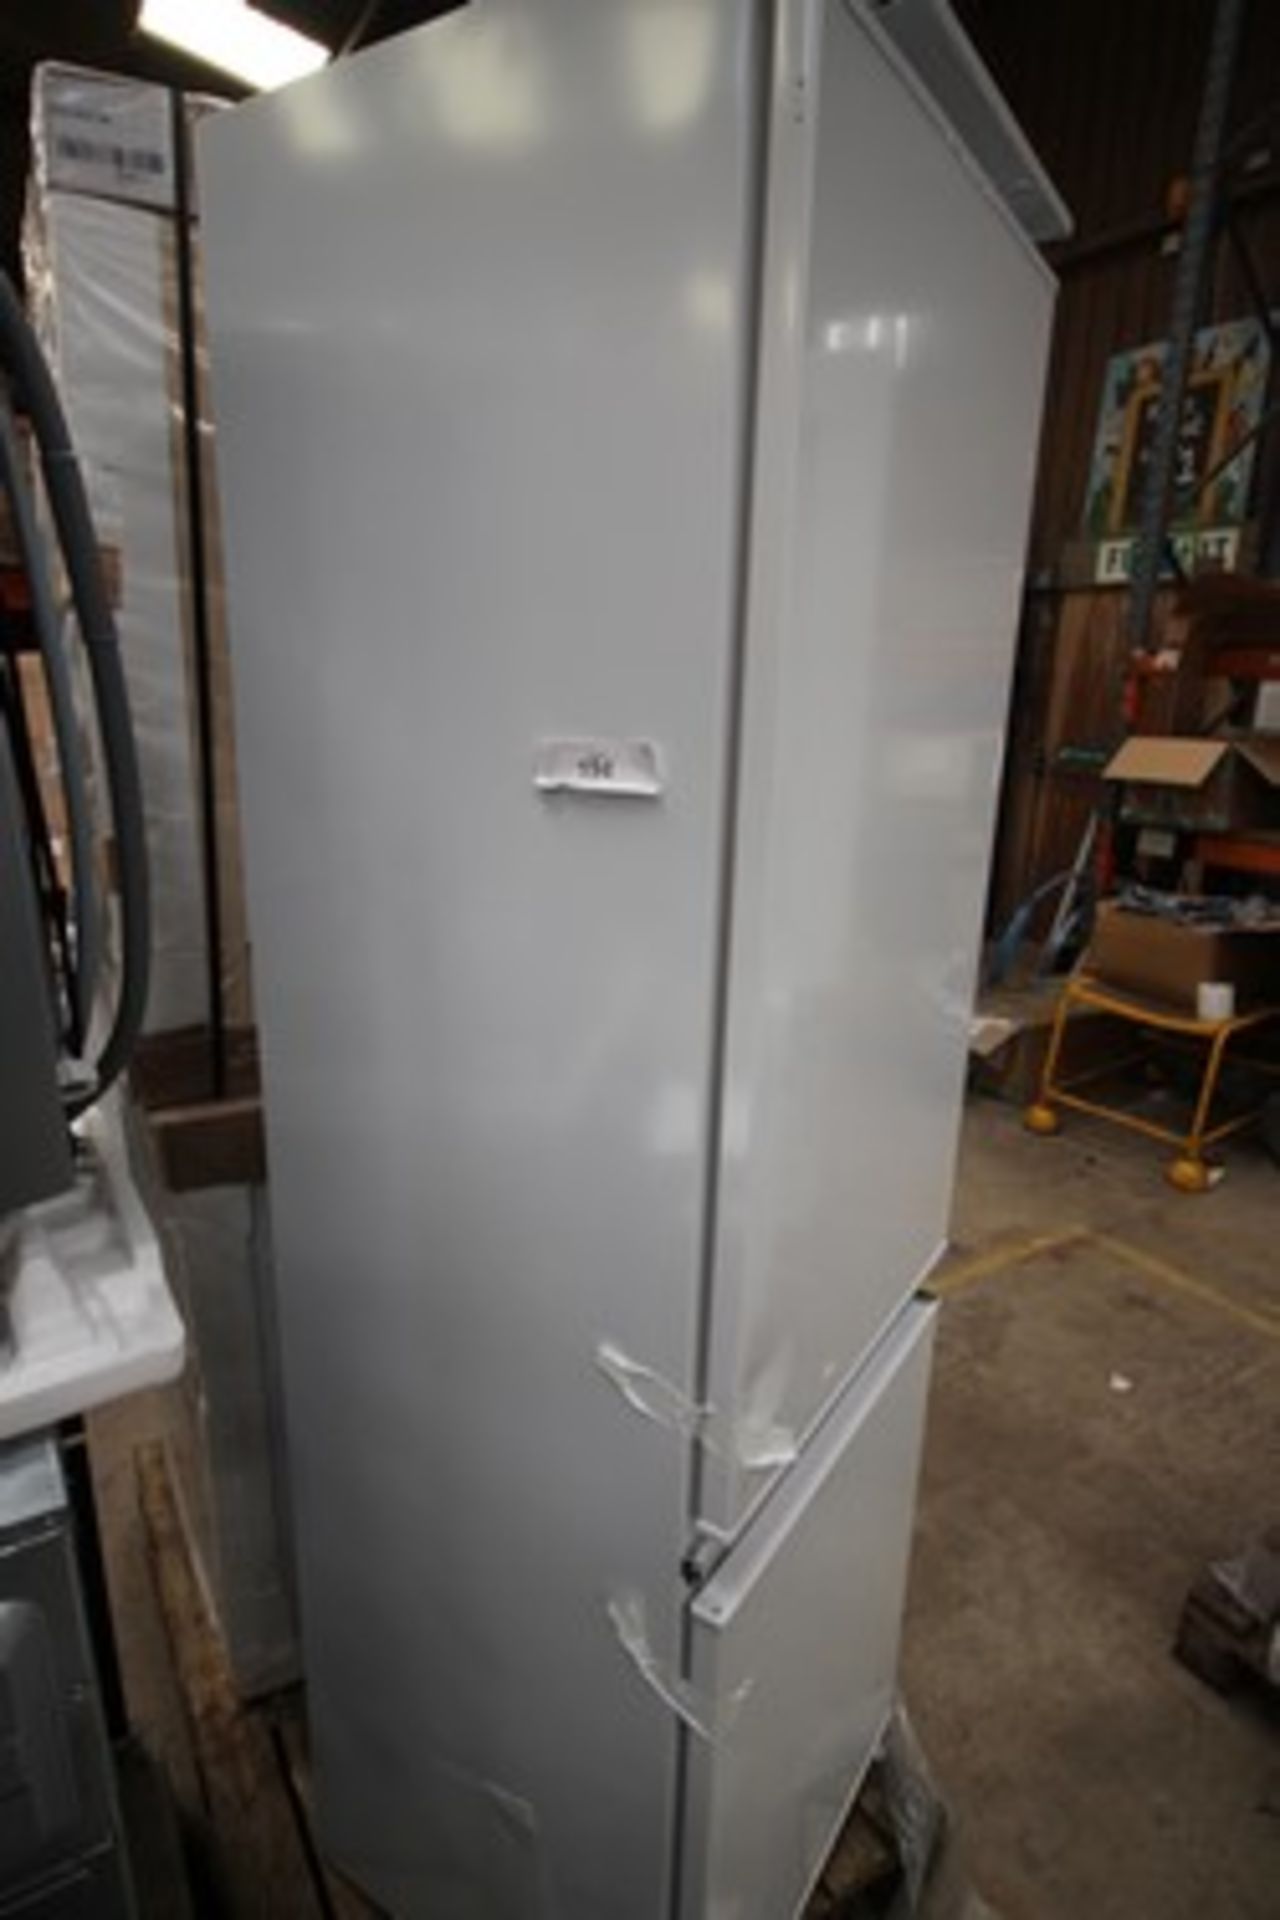 1 x Hisense built in fridge freezer, Model RIB312F4AWE, dented top right corner - New (eBay 10) - Image 5 of 5